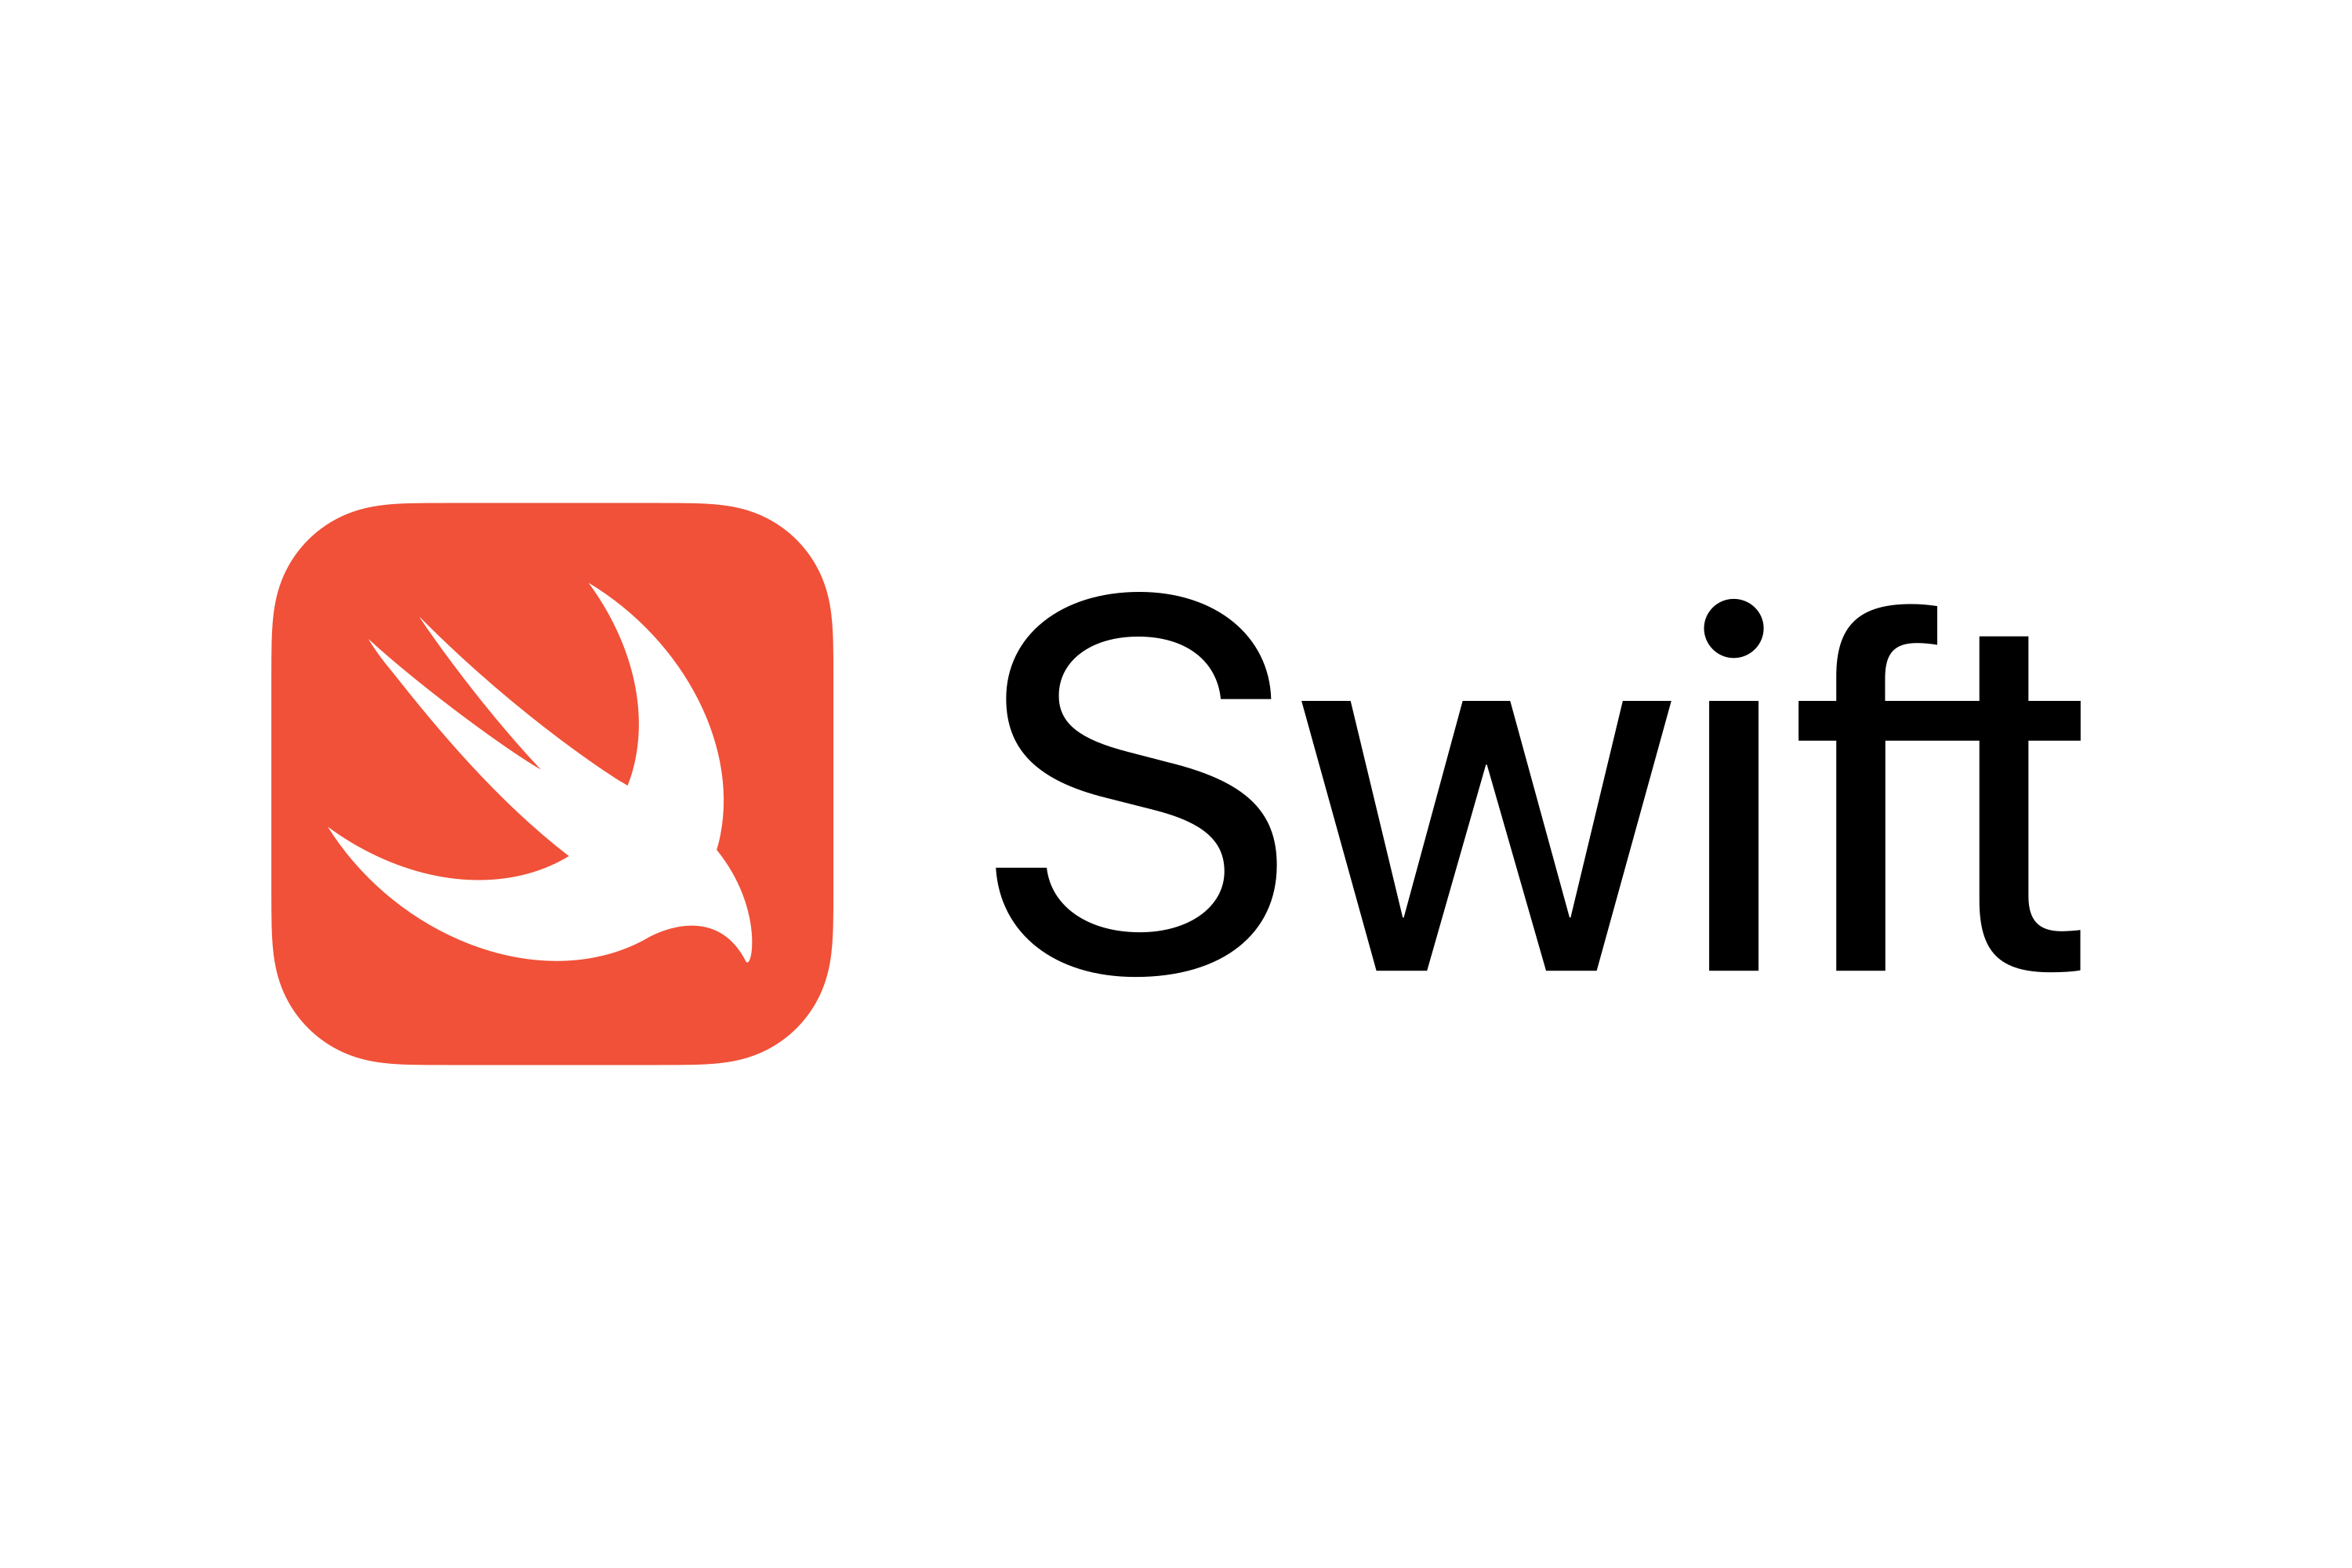 Download Swift Logo in SVG Vector or PNG File Format - Logo.wine